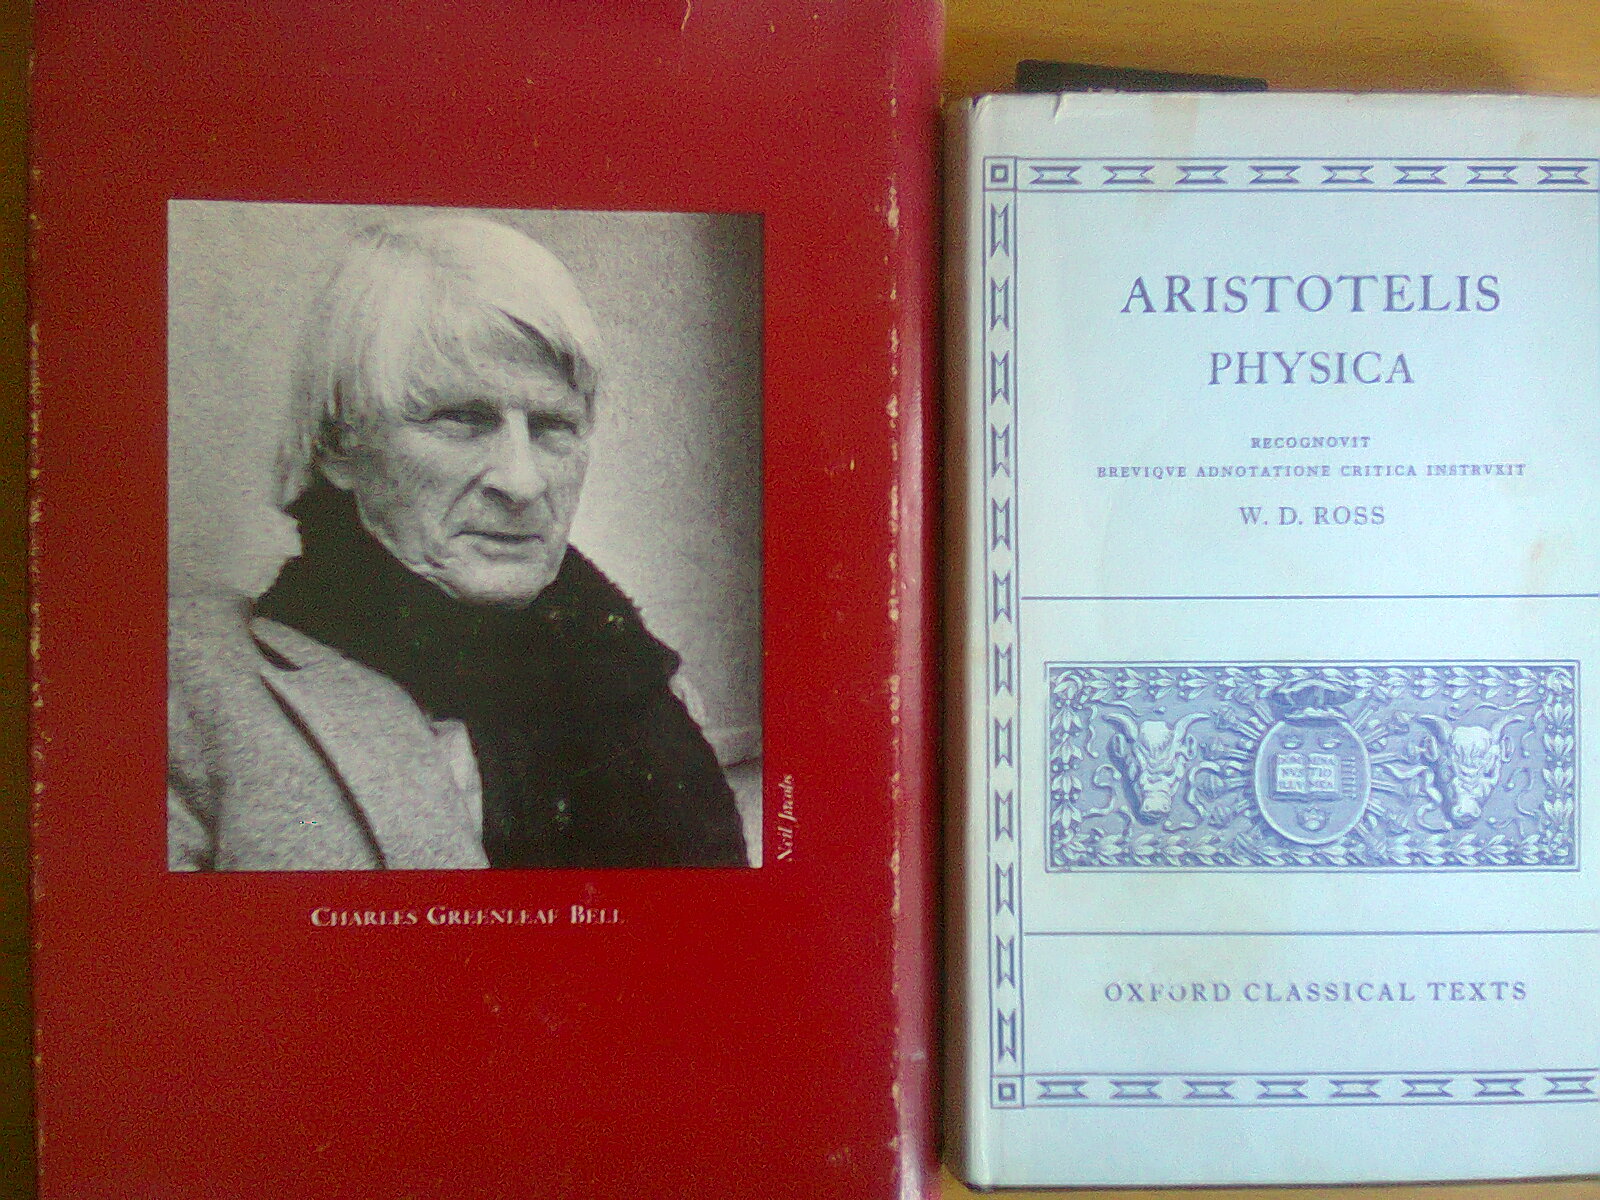 Aristotelian physics - Wikipedia